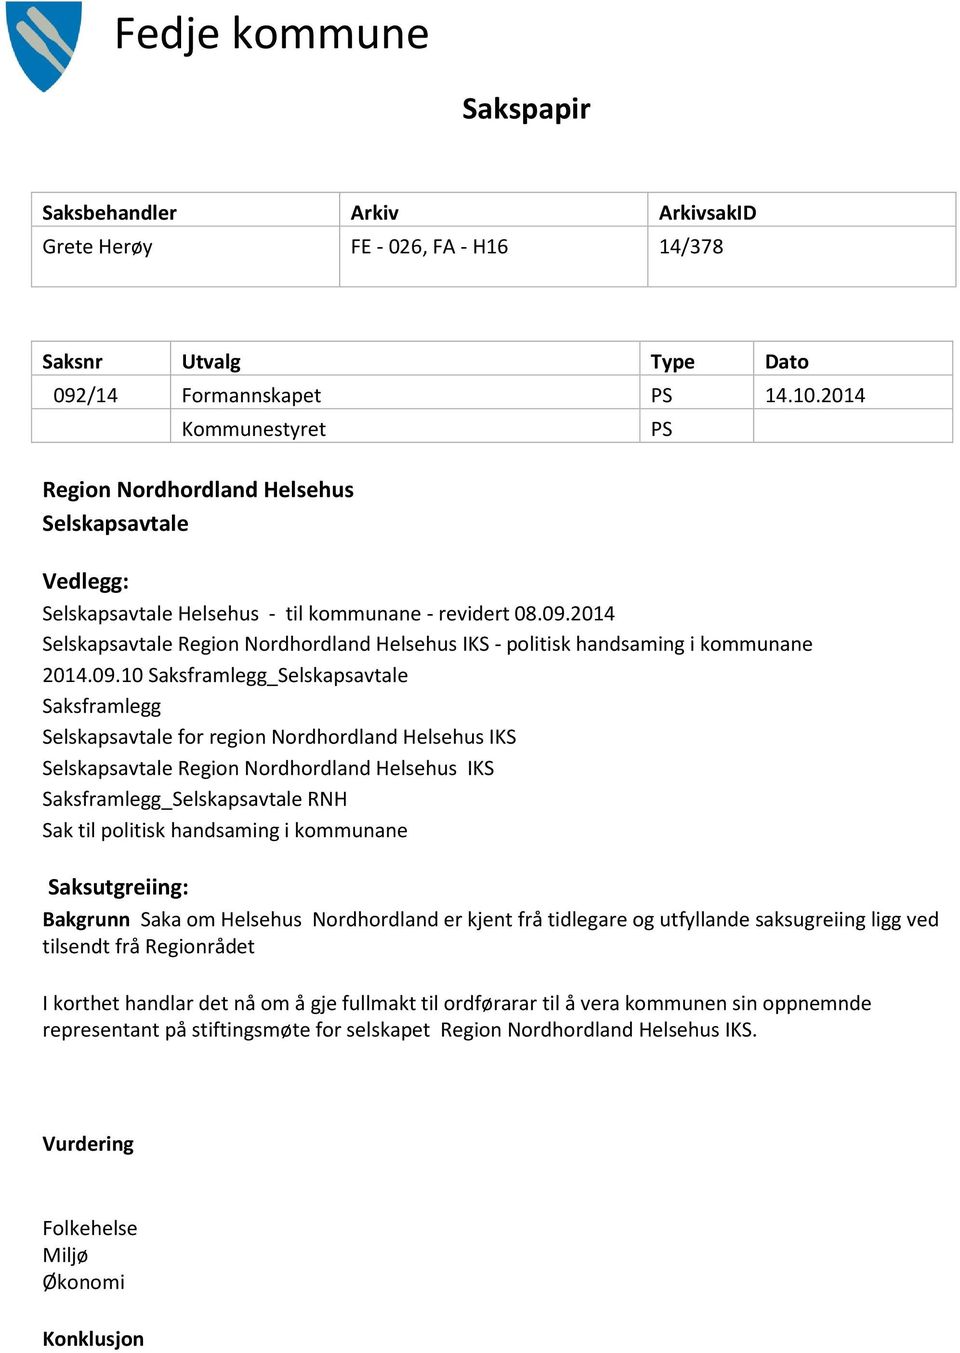 2014 Selskapsavtale Region Nordhordland Helsehus IKS - politisk handsaming i kommunane 2014.09.